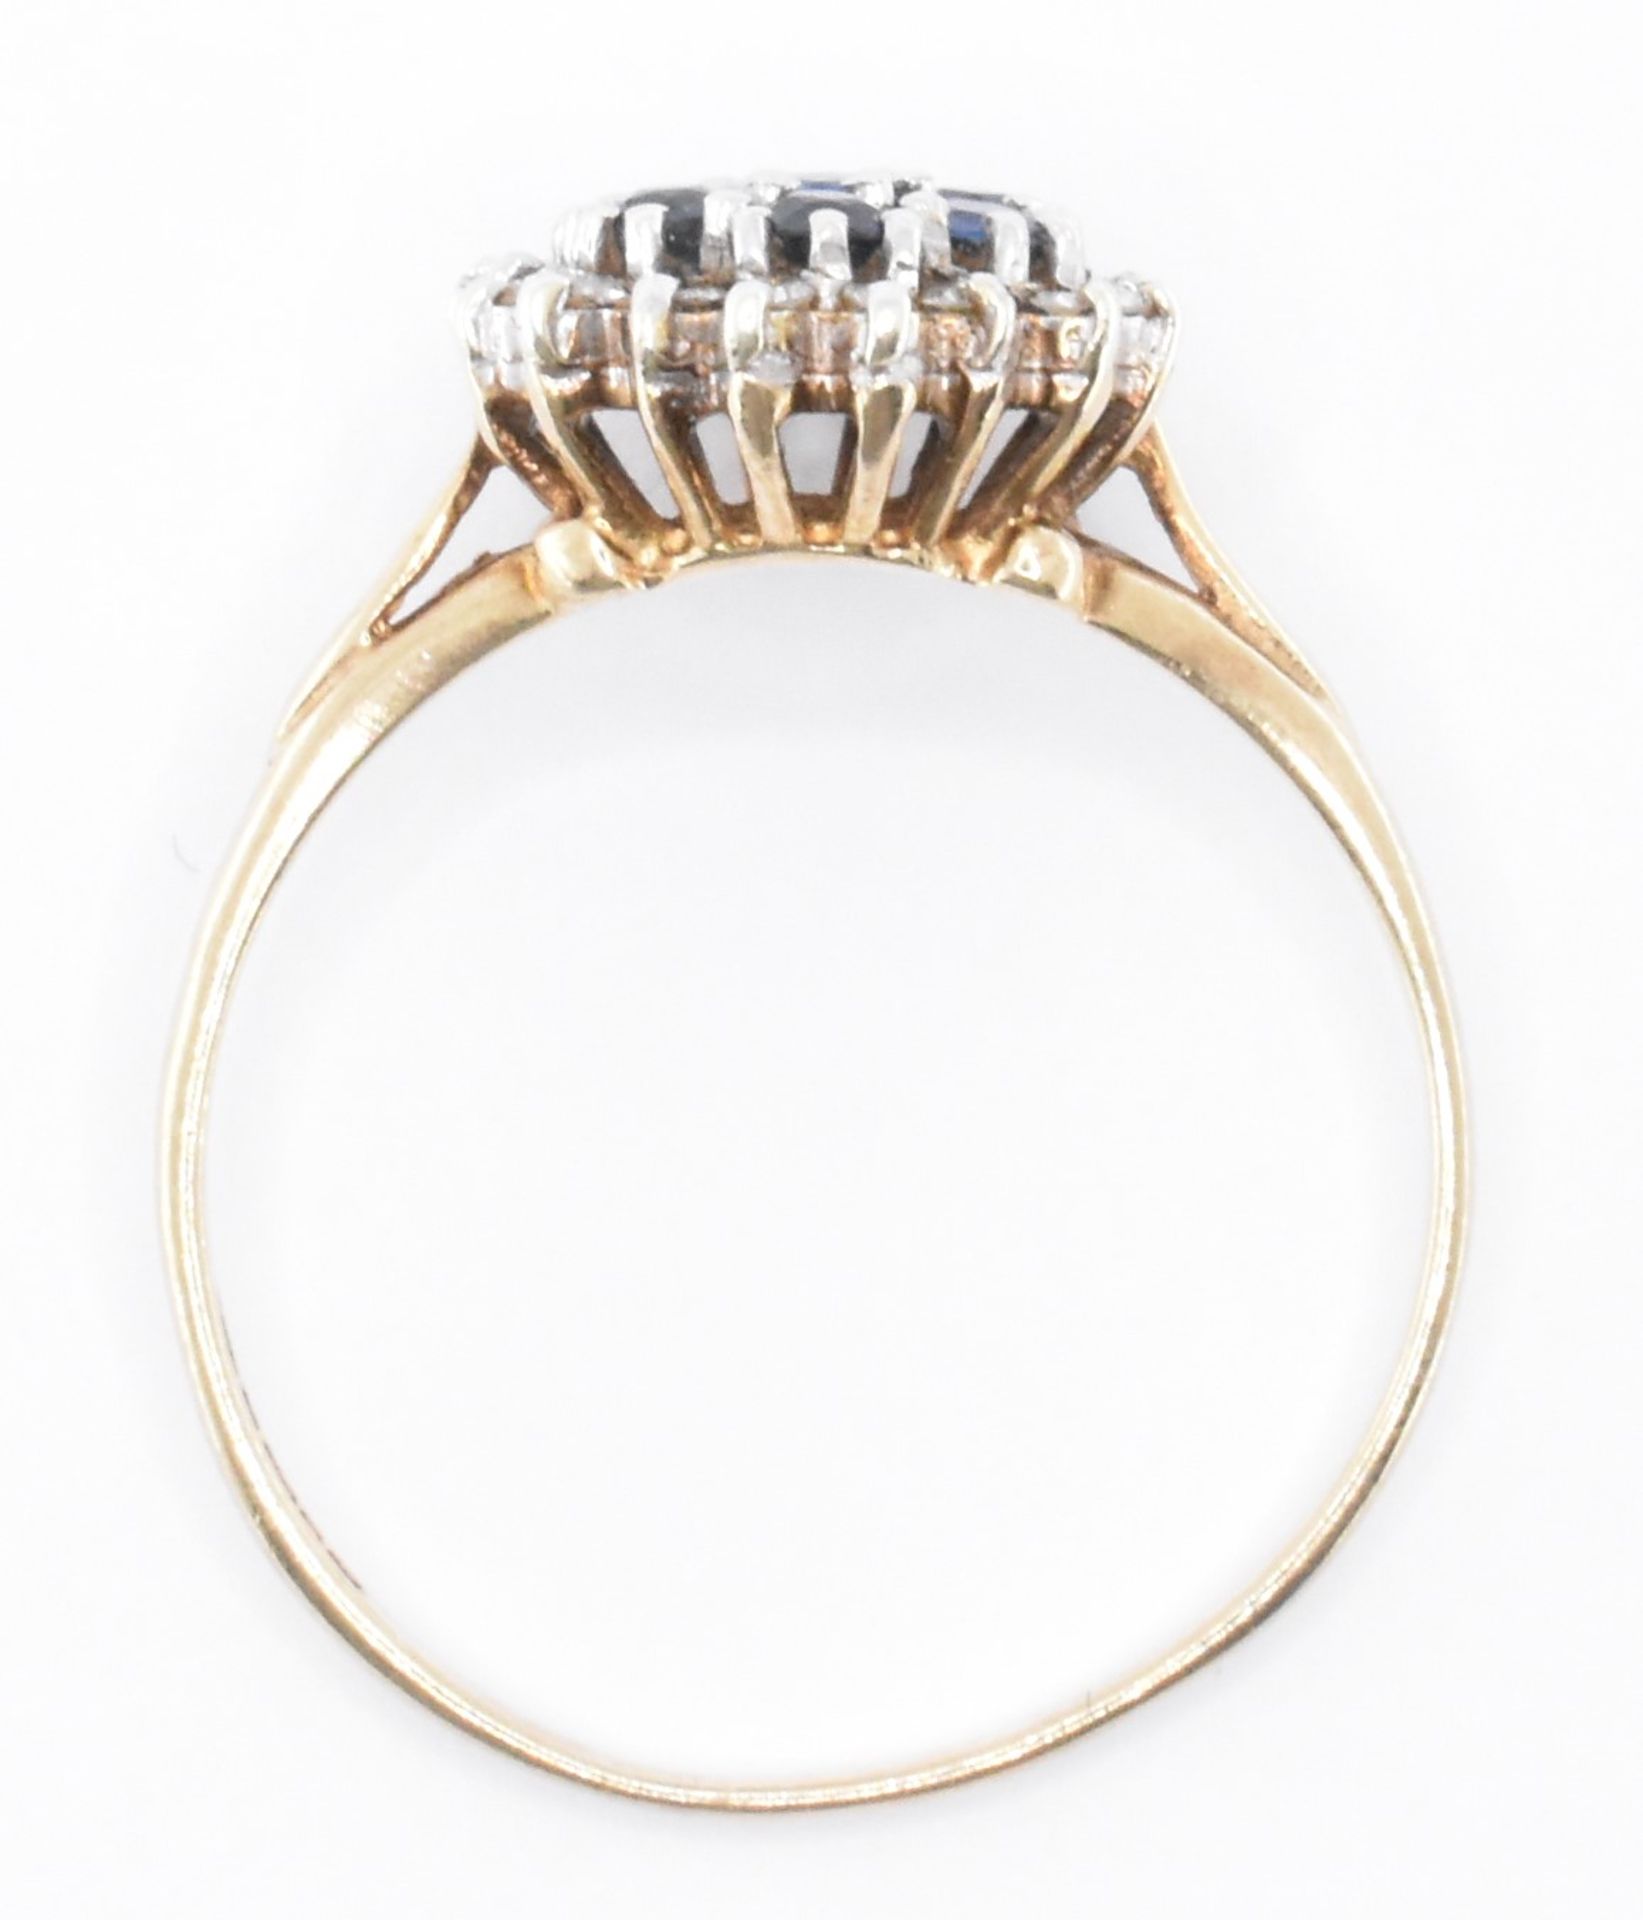 HALLMARKED DIAMOND & SAPPHIRE CLUSTER RING - Image 5 of 6